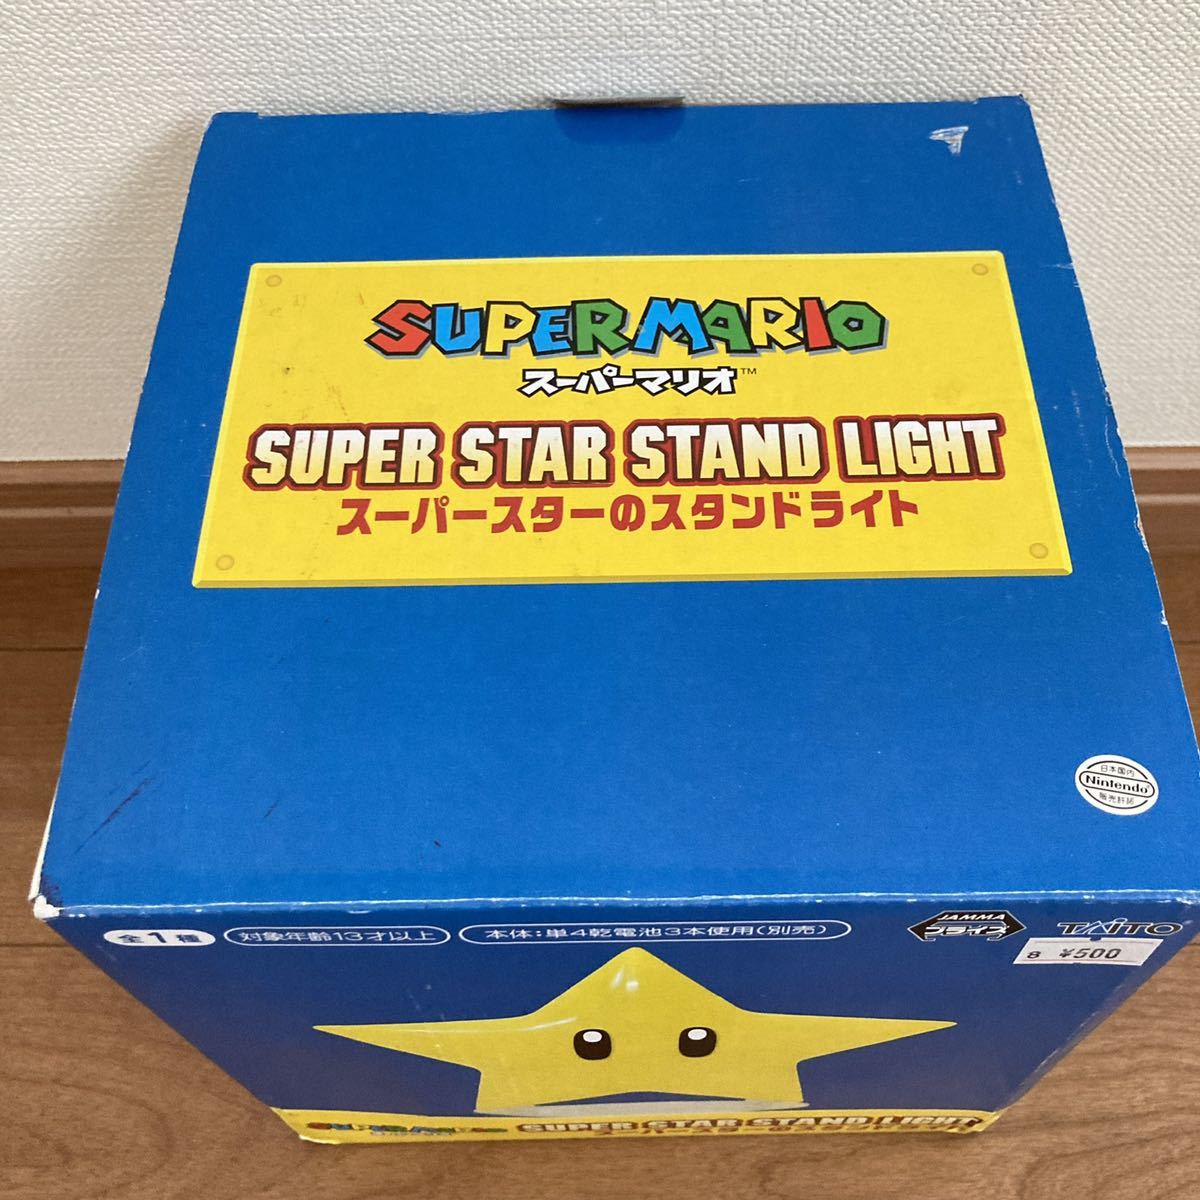  super Mario super Star. подставка свет тип аккумулятора taito приз не использовался товар самый жребий 